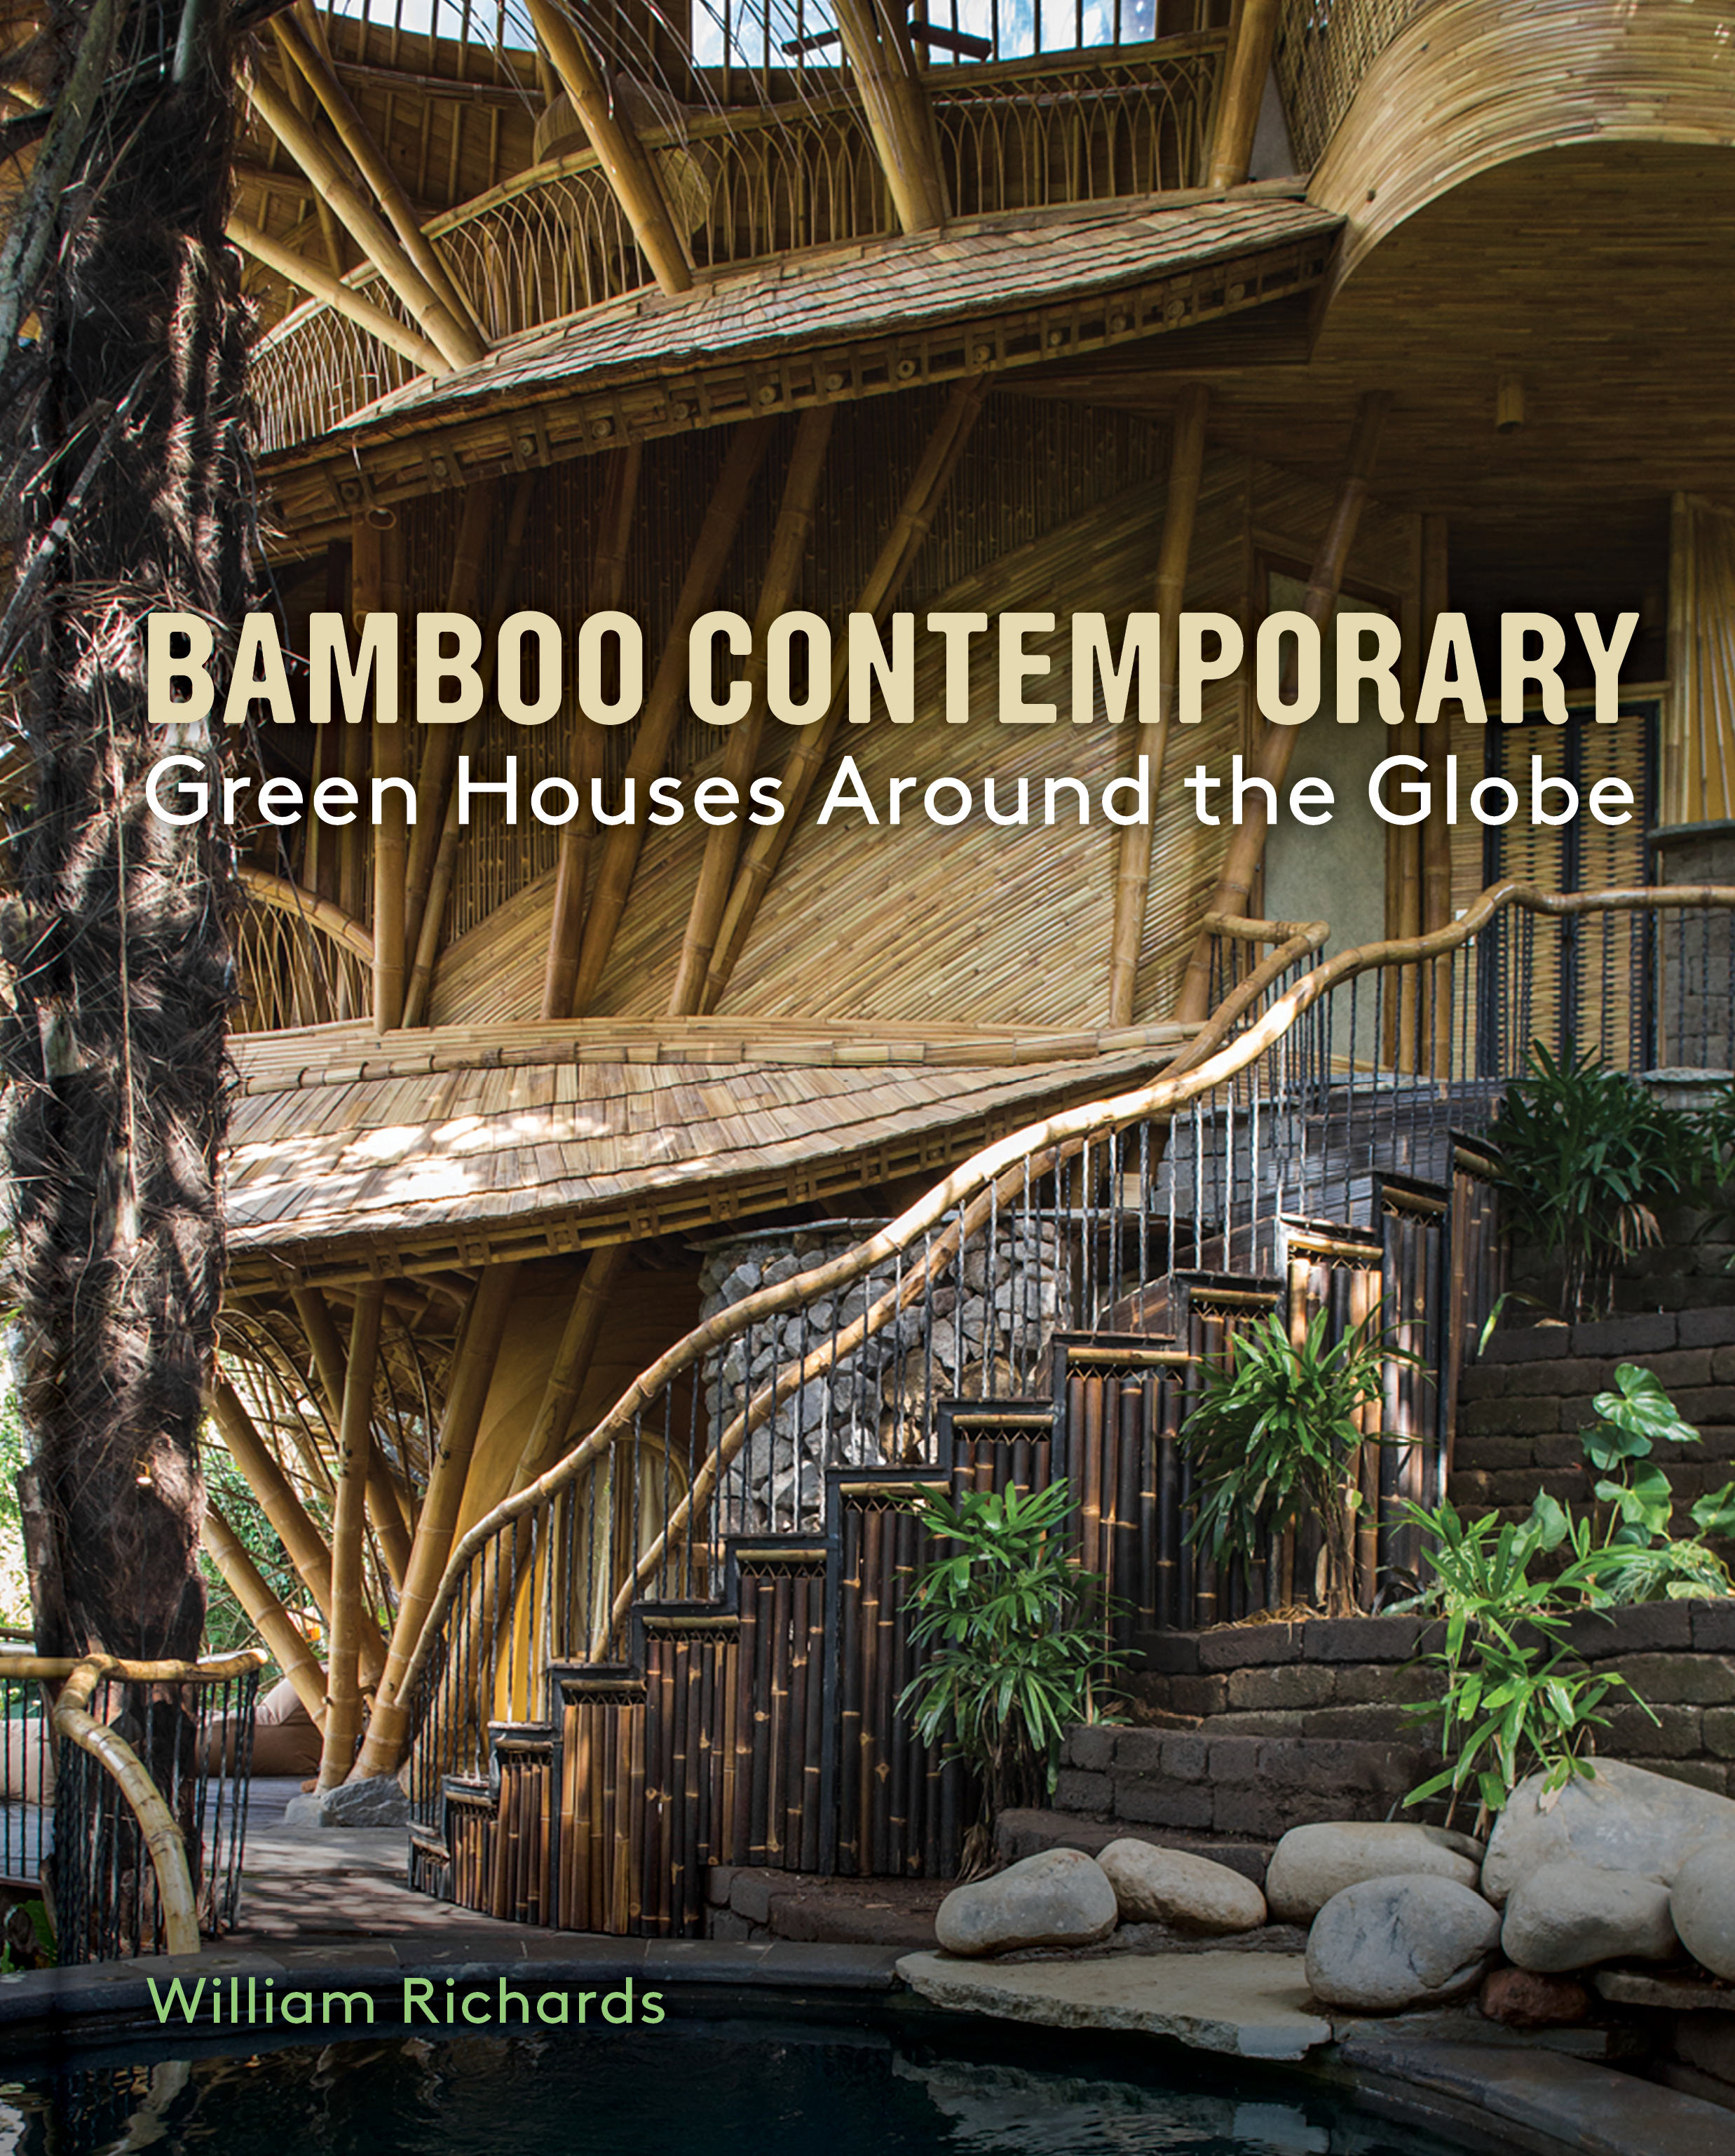 BambooContemporary-cover_FINAL